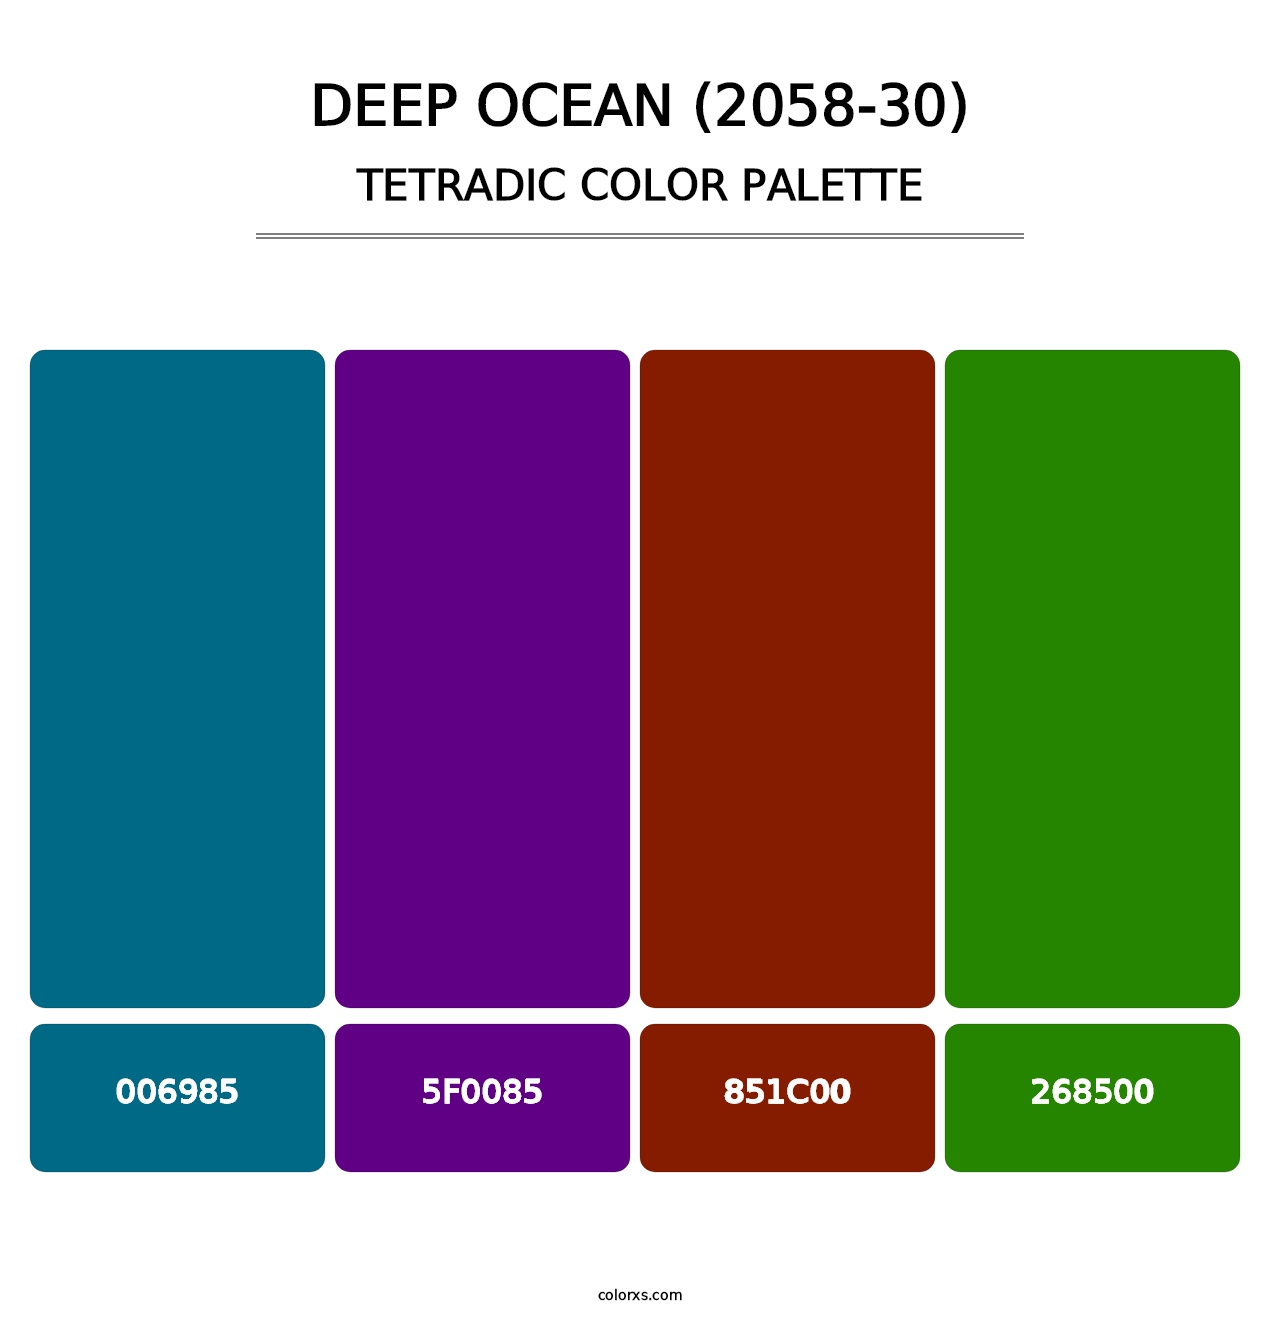 Deep Ocean (2058-30) - Tetradic Color Palette